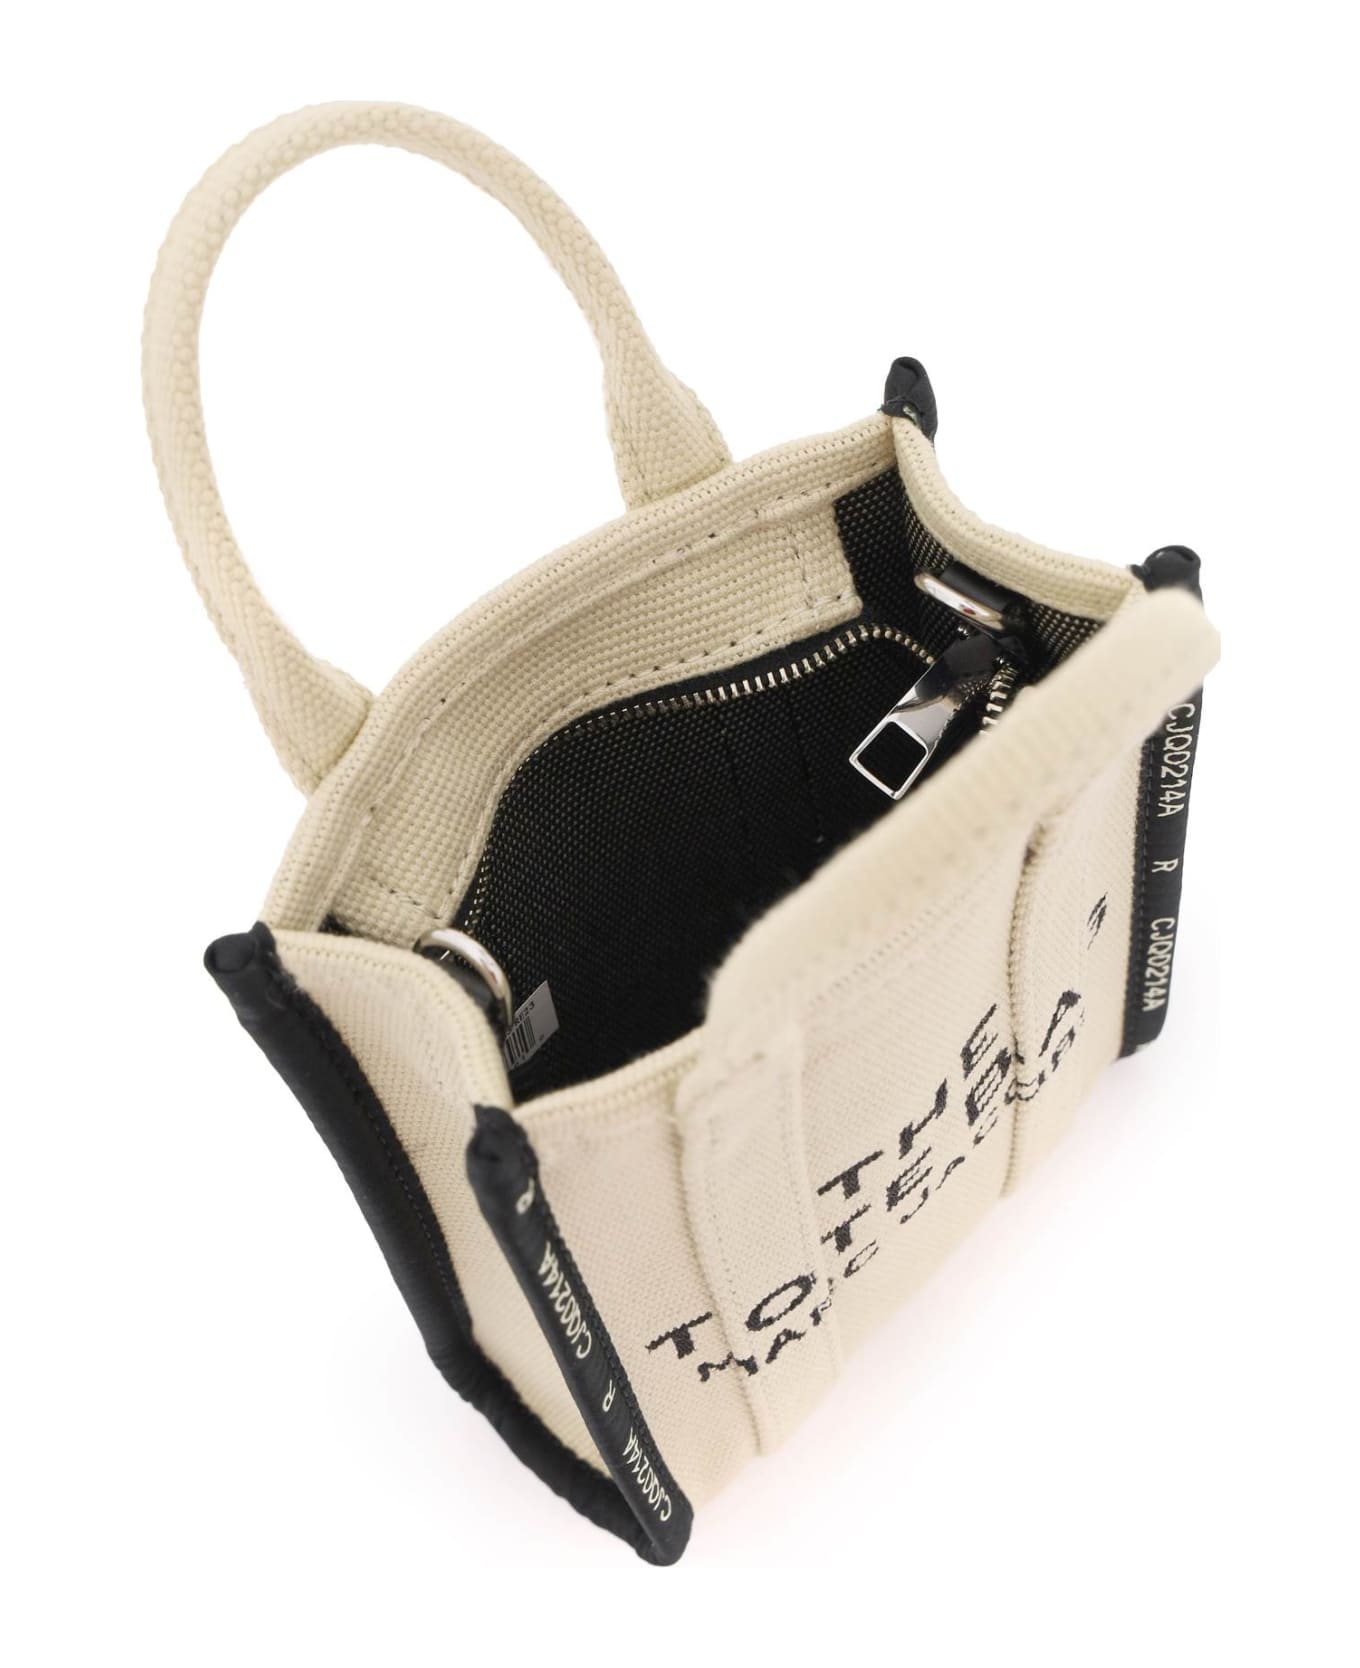 Marc Jacobs The Jacquard Mini Tote Bag - Beige